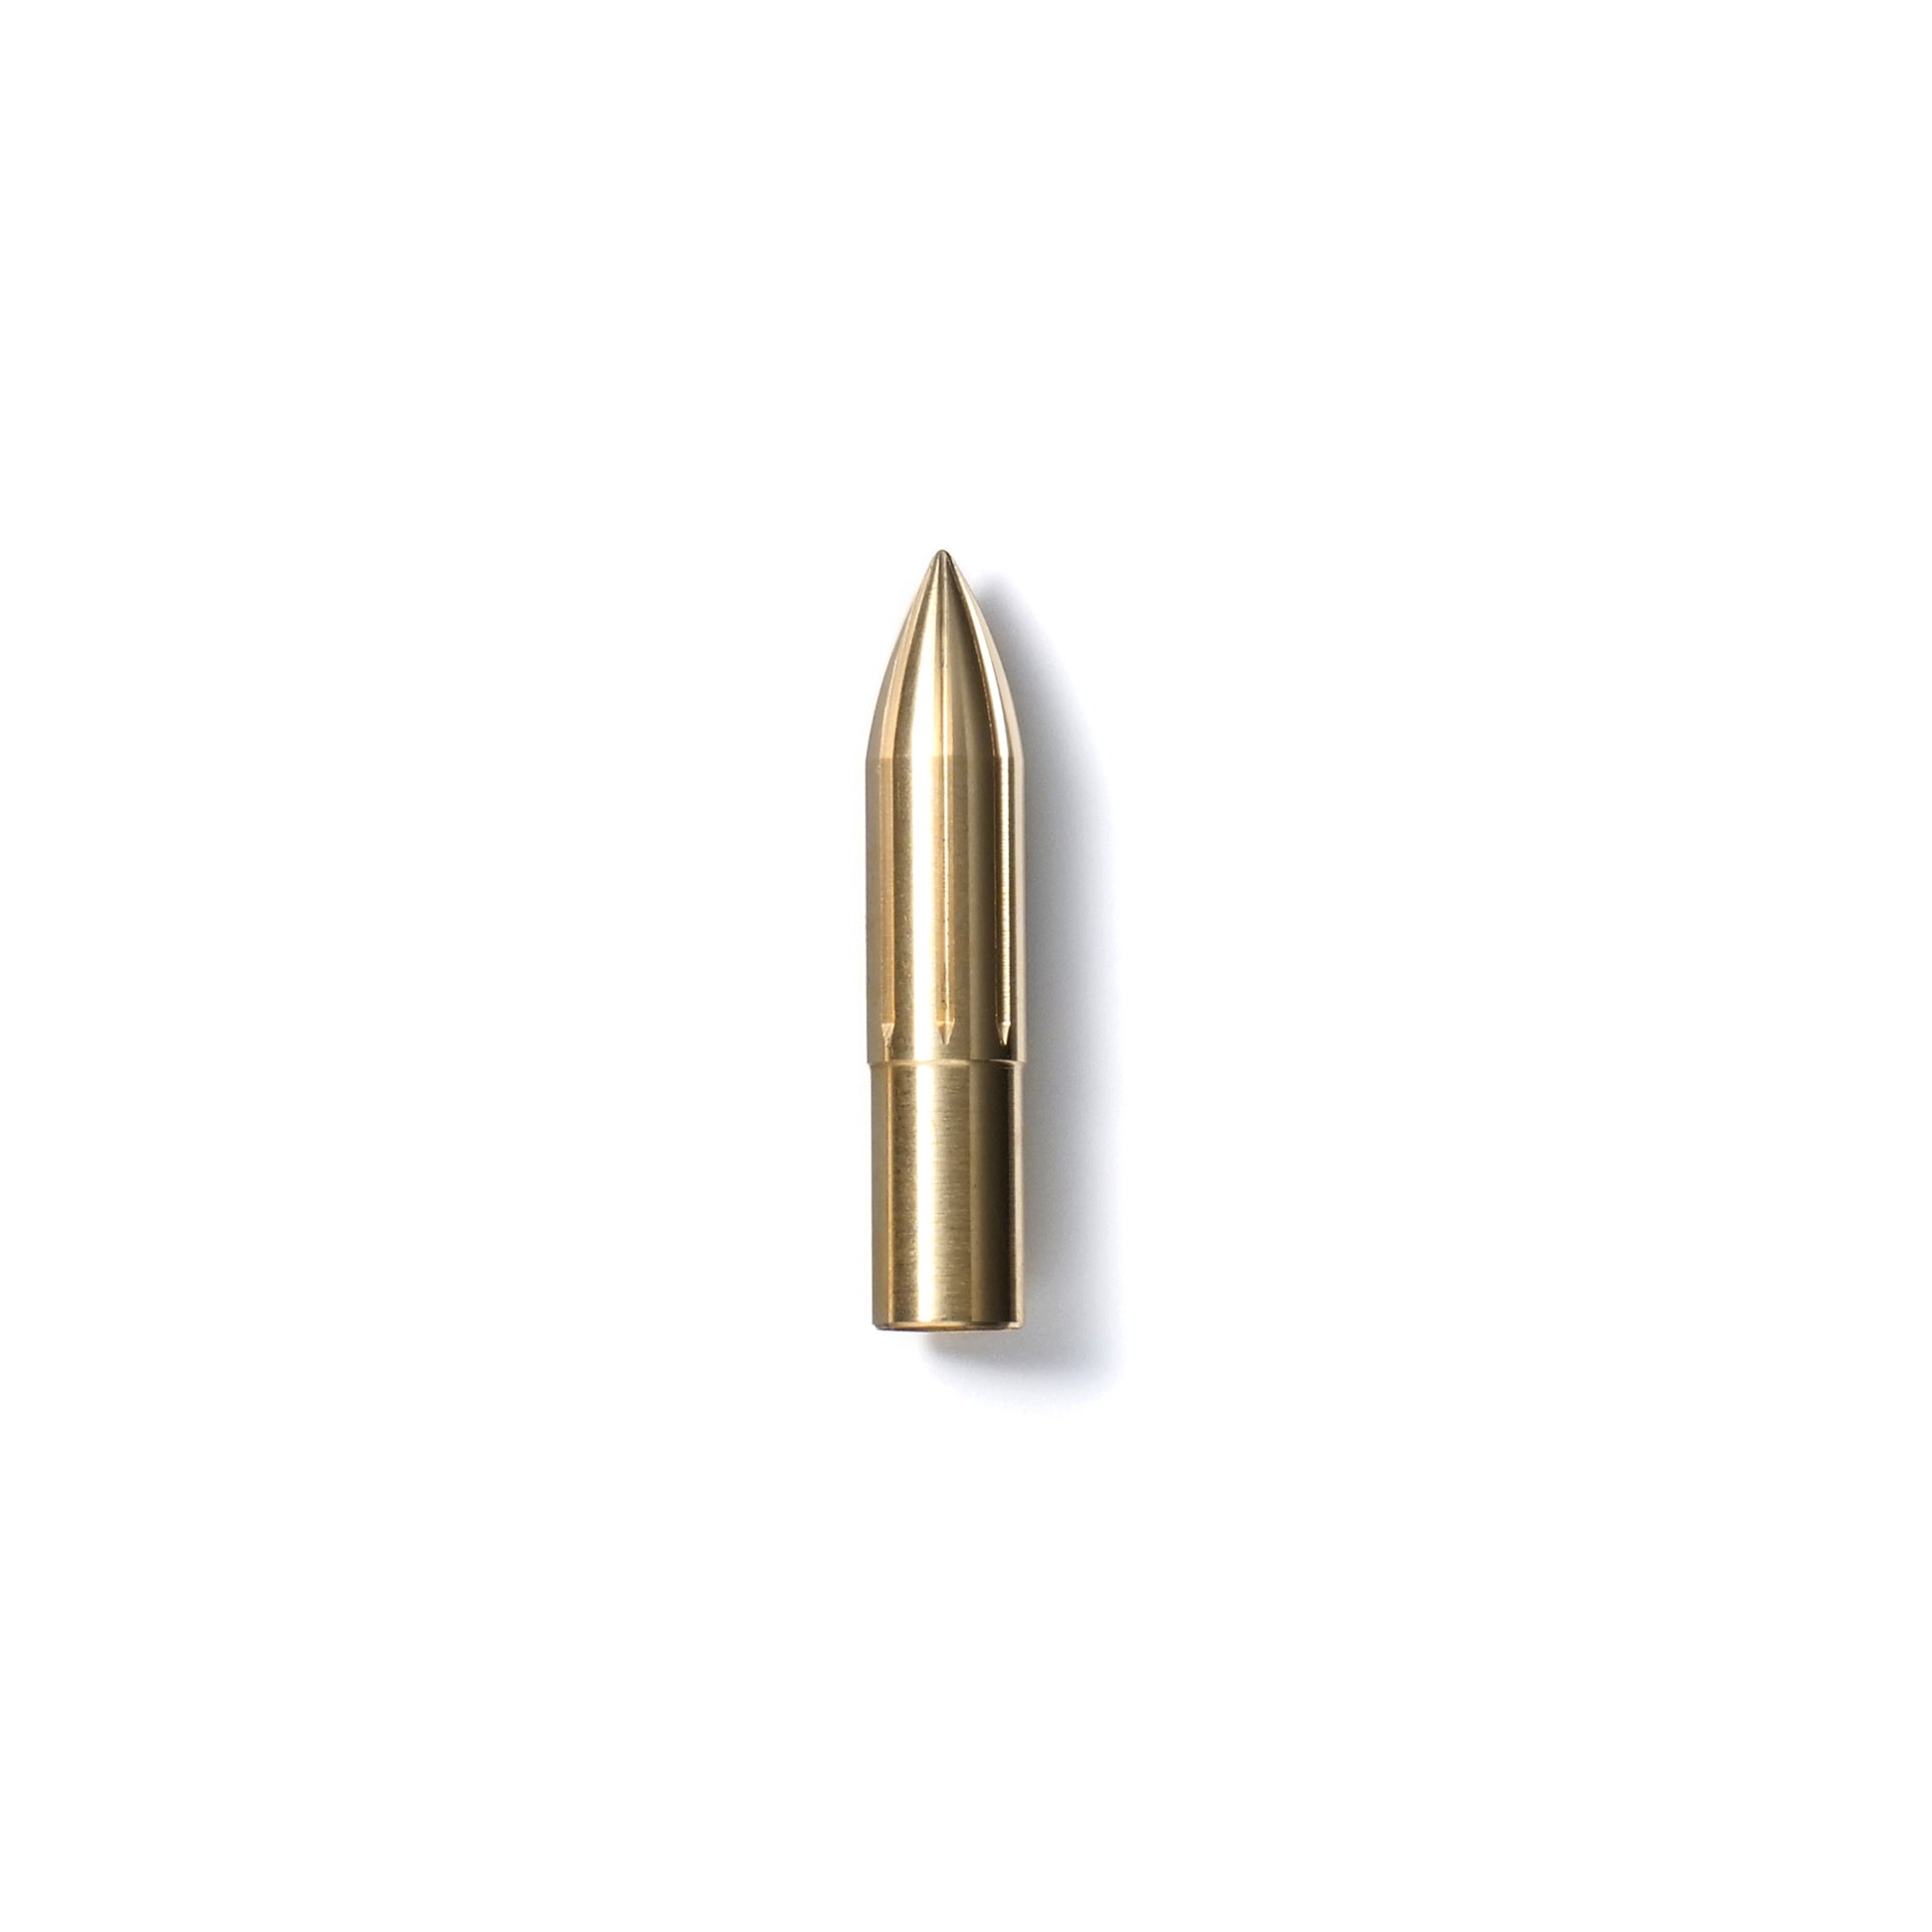 Kakimori Metal Nib - Brass - Dip Pen Nib Made in Japan